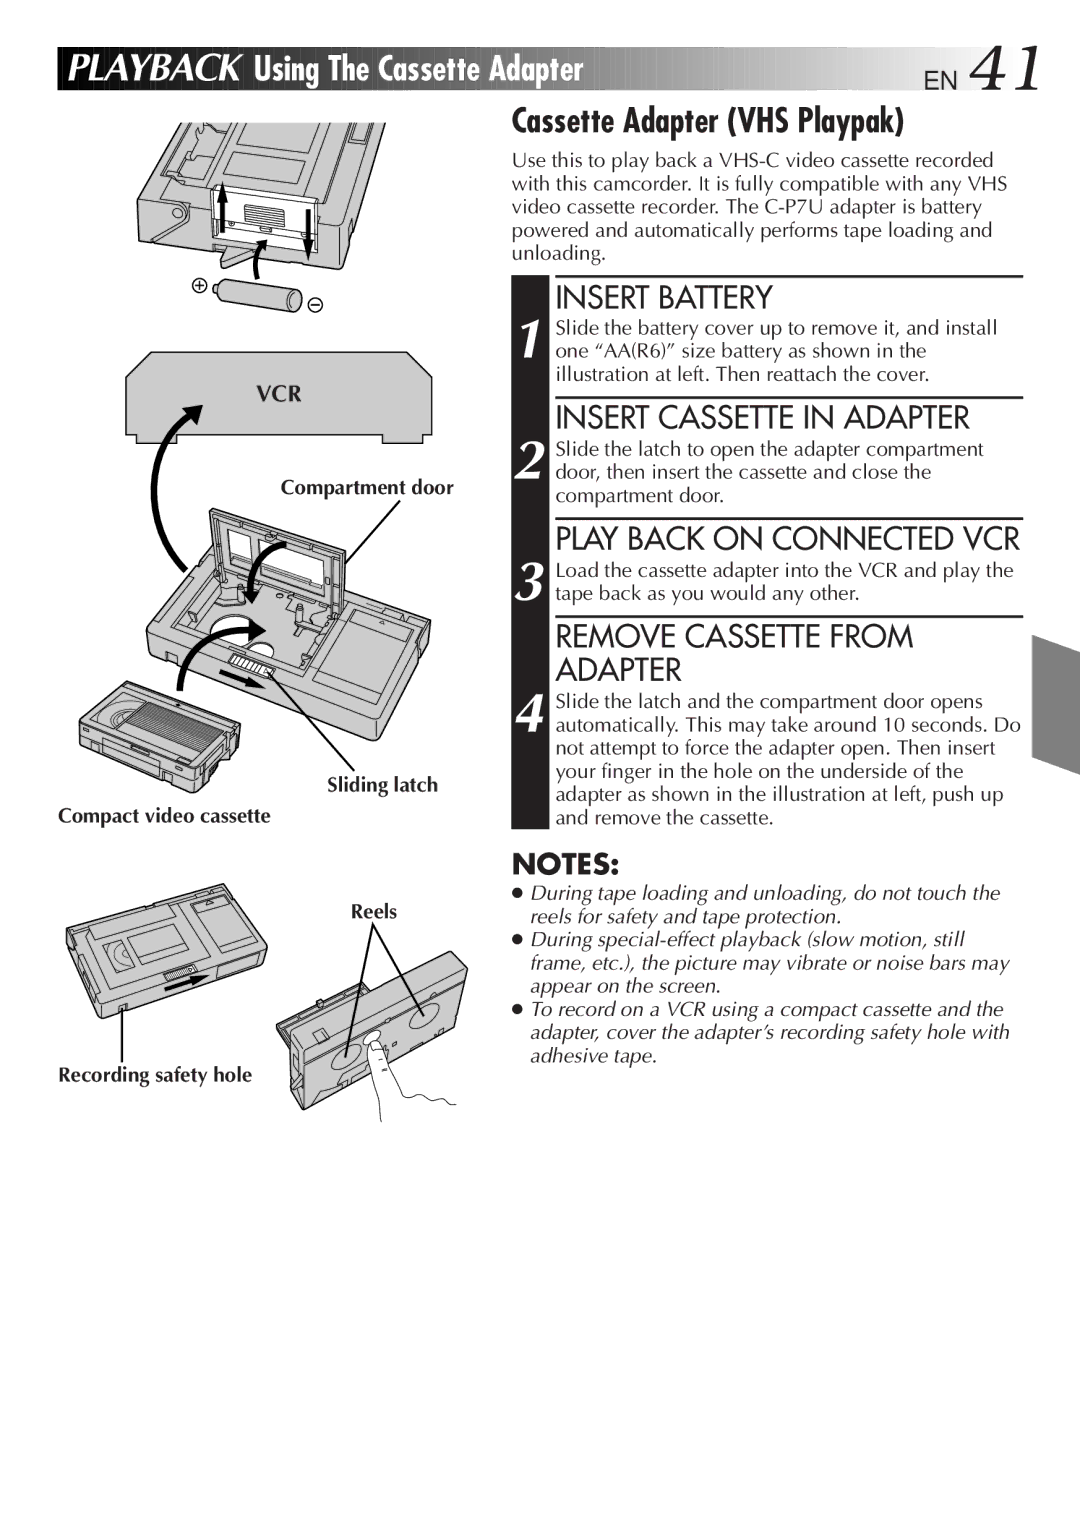 JVC GR-AXM750 manual Using The Cassette Adapter EN, Cassette Adapter VHS Playpak, Insert Cassette in Adapter 